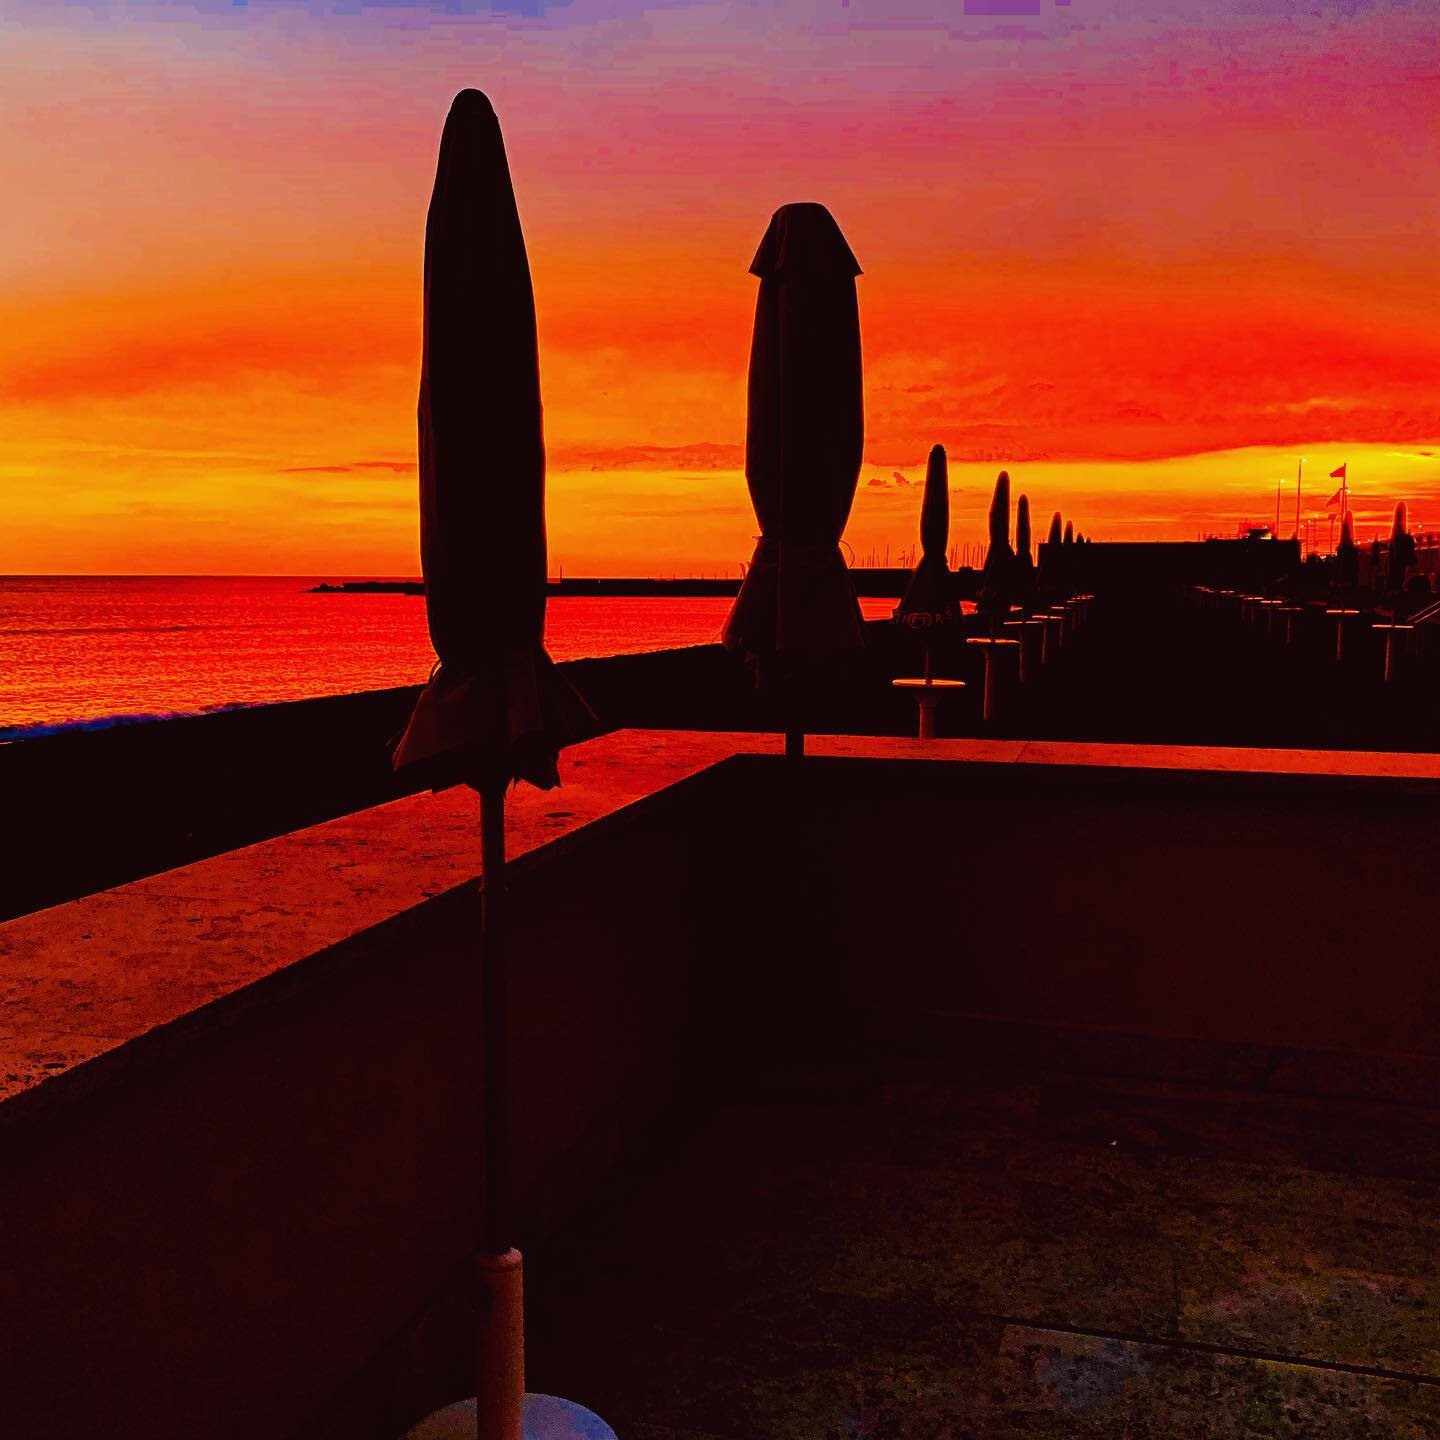 Sunset time&hellip;..
#sunsetbar #tramonti #tramontialmare #lavecchiapineta @lavecchiapineta_bar @la_vecchia_pineta